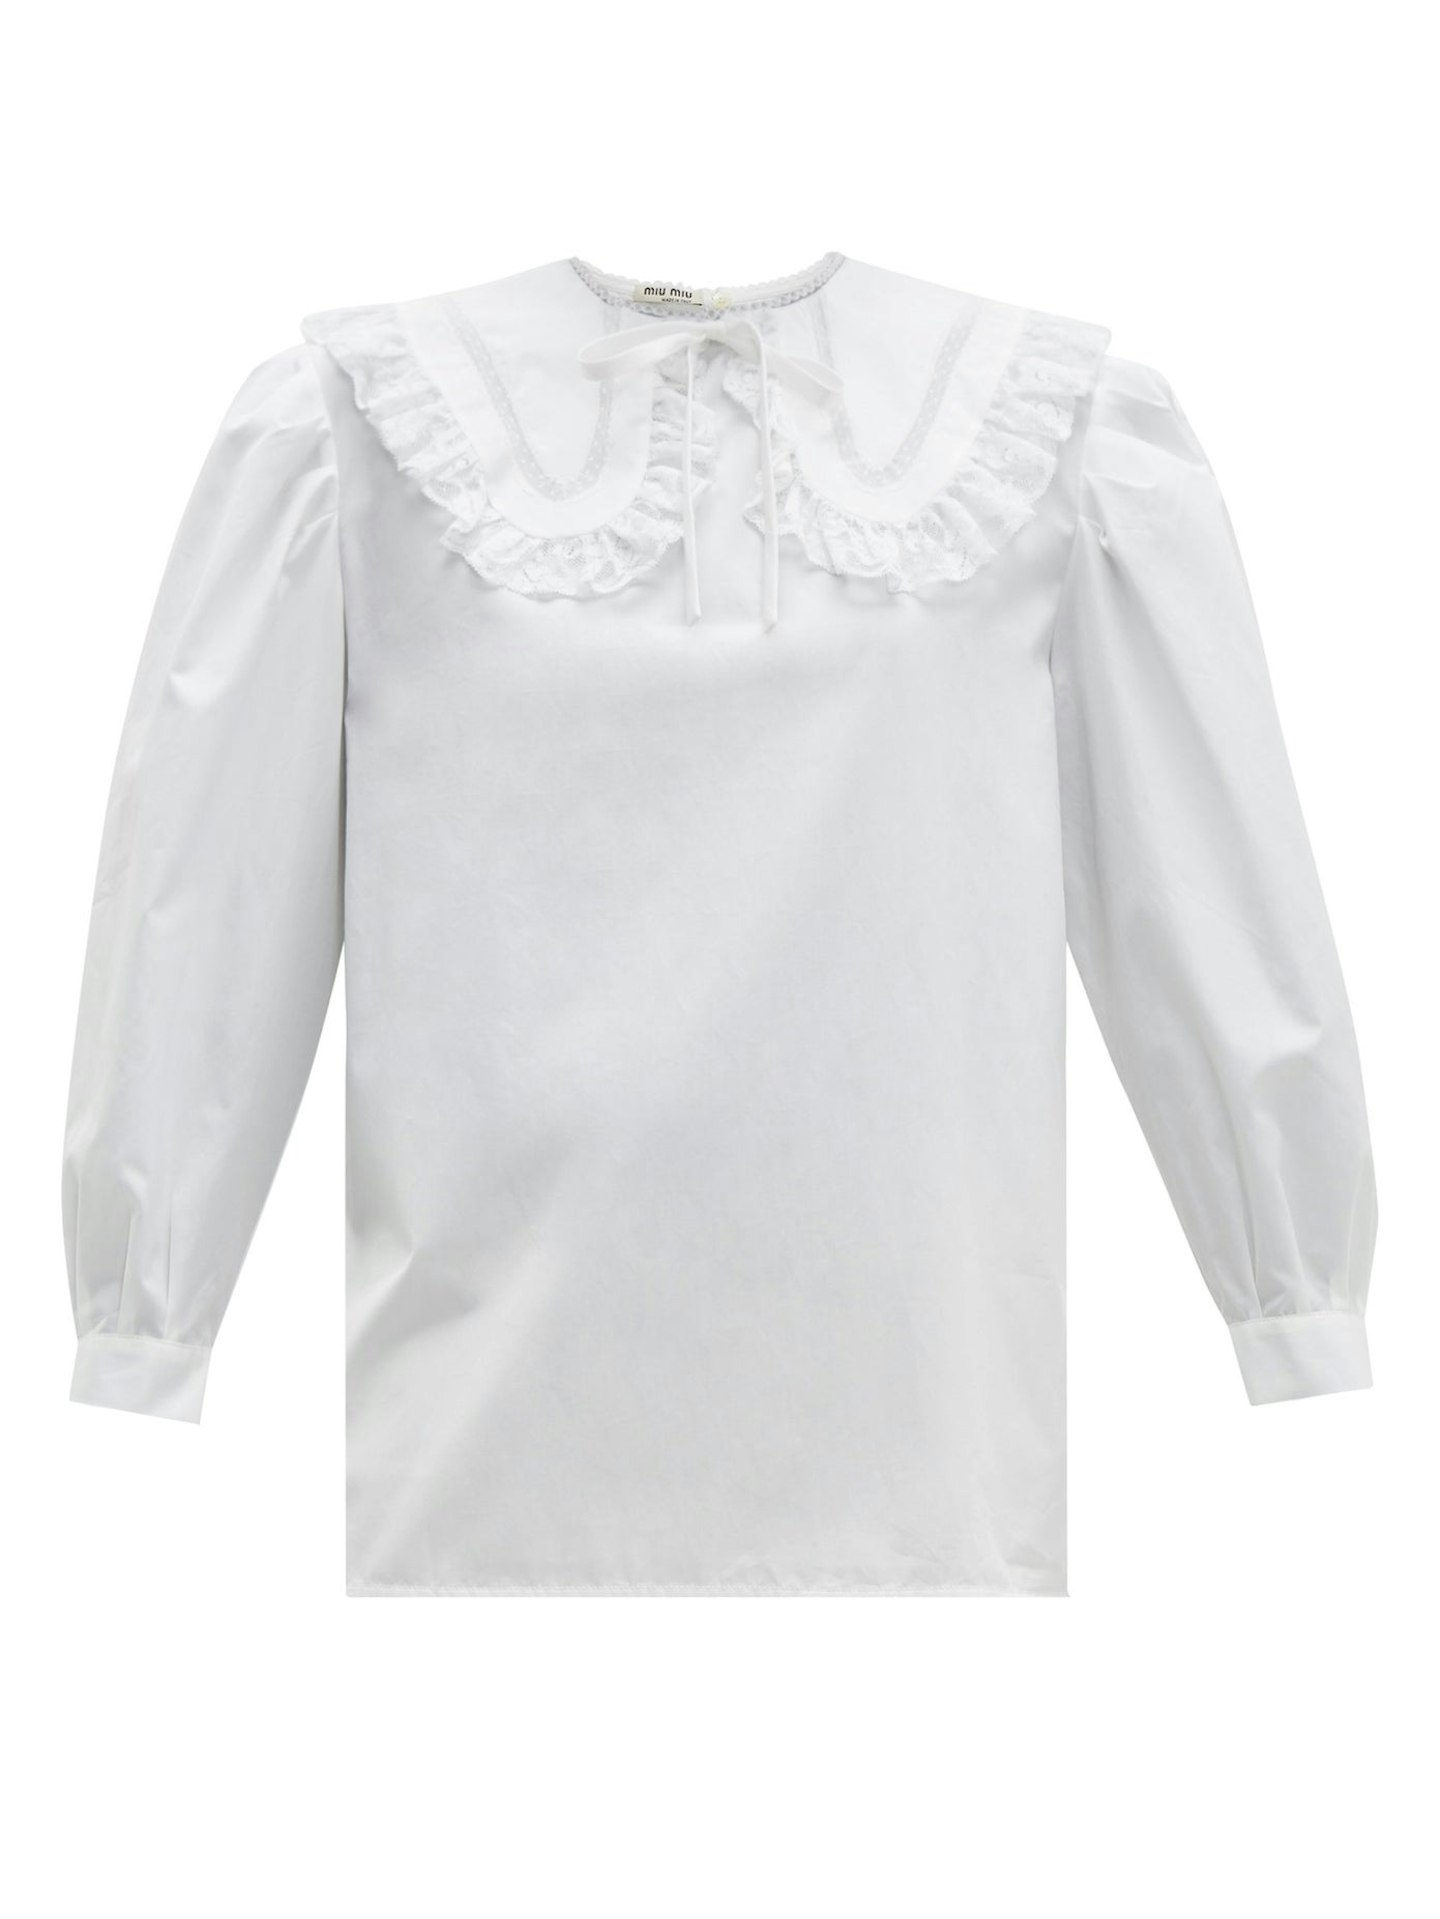 Miu Miu, Lace-Trimmed Cotton Blouse, £665 at Matchesfashion.com